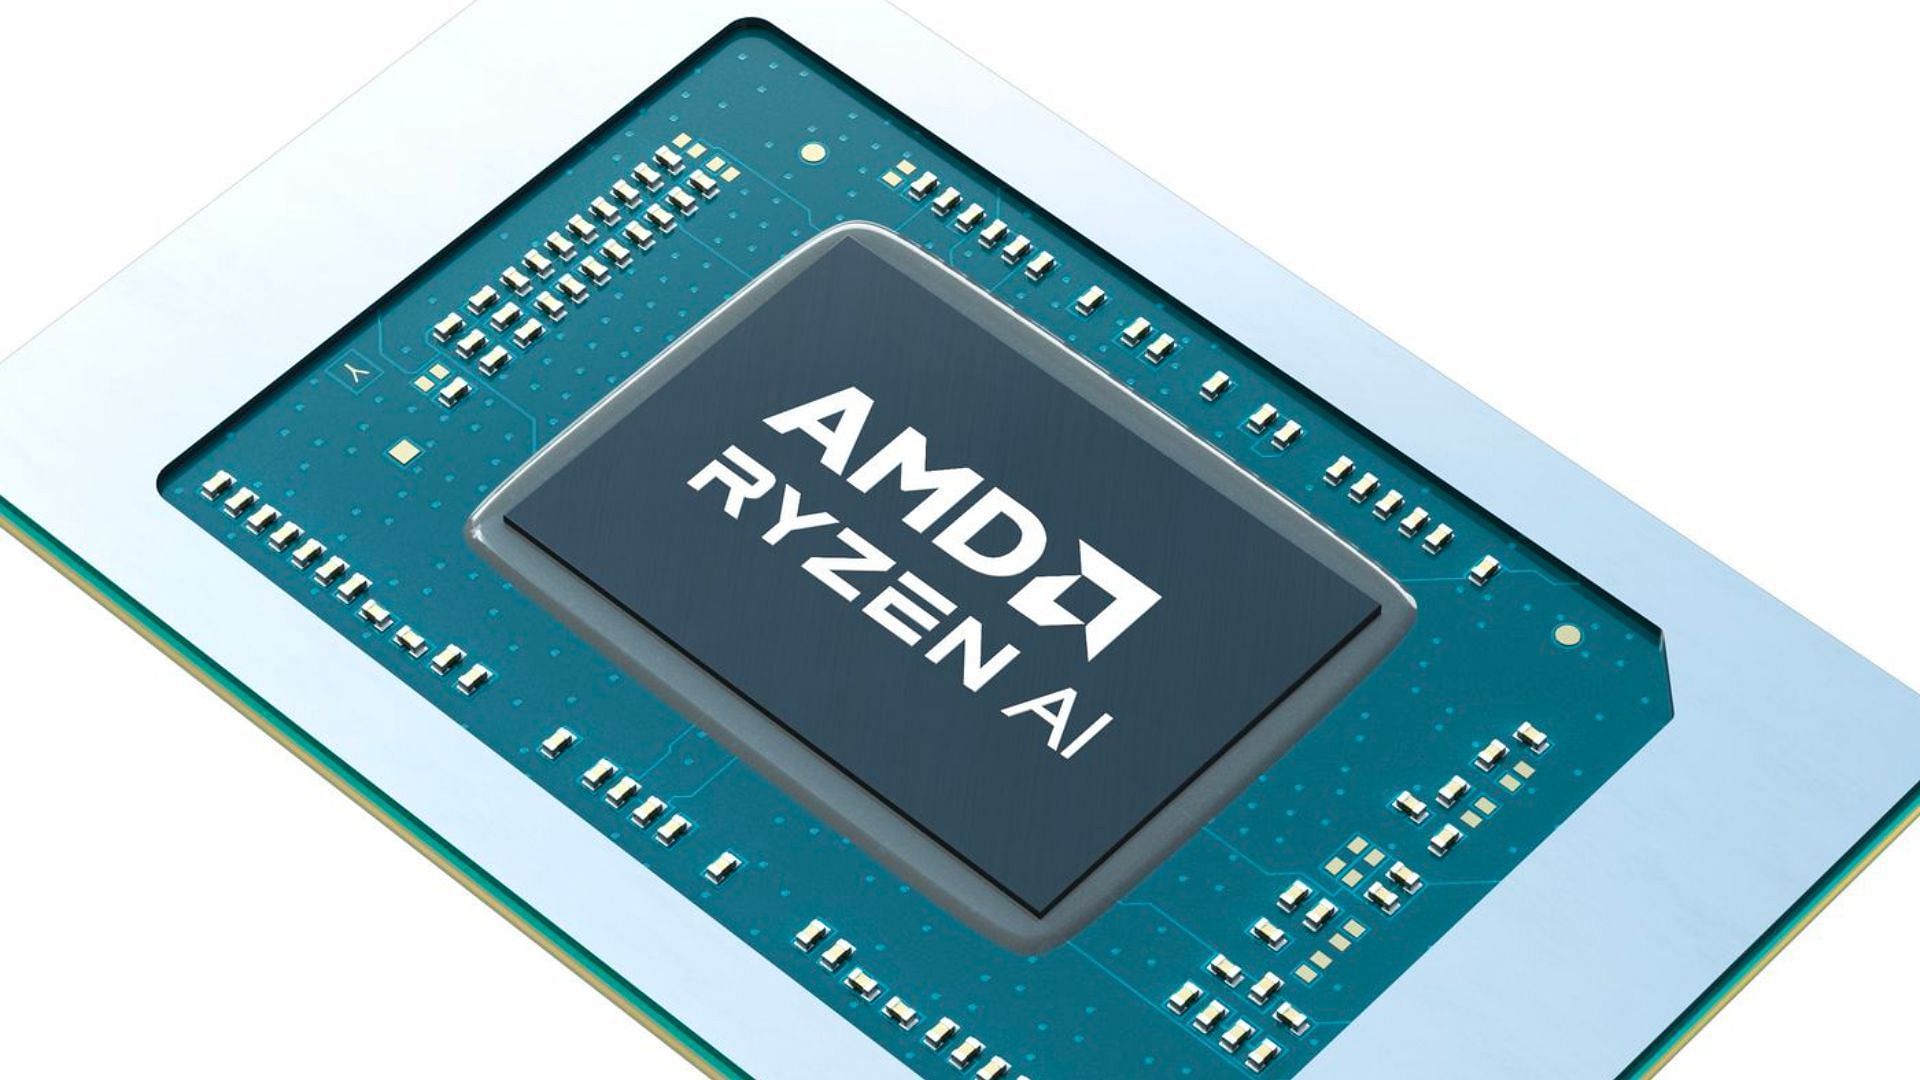 AMD Ryzen chps might soon be rebranded per a recent leak (Image via AMD)